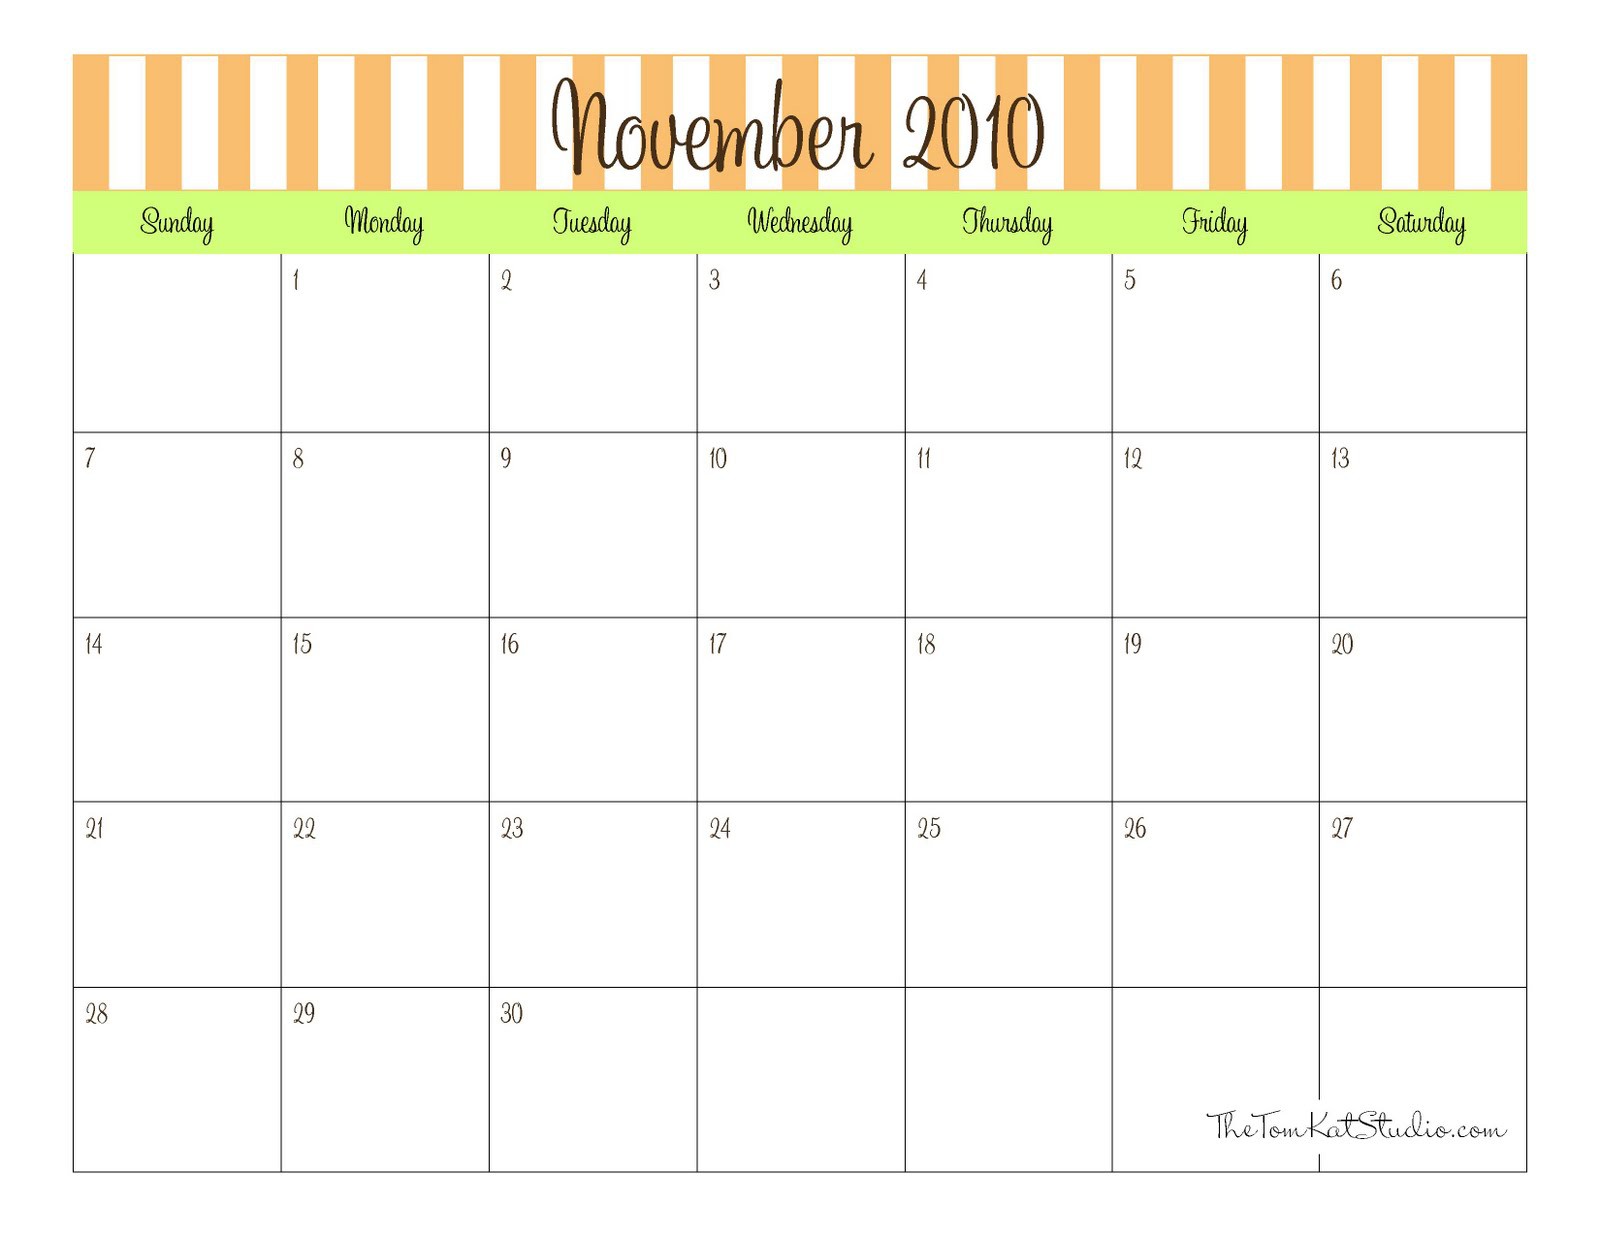 6 best images of preschool calendar printable november